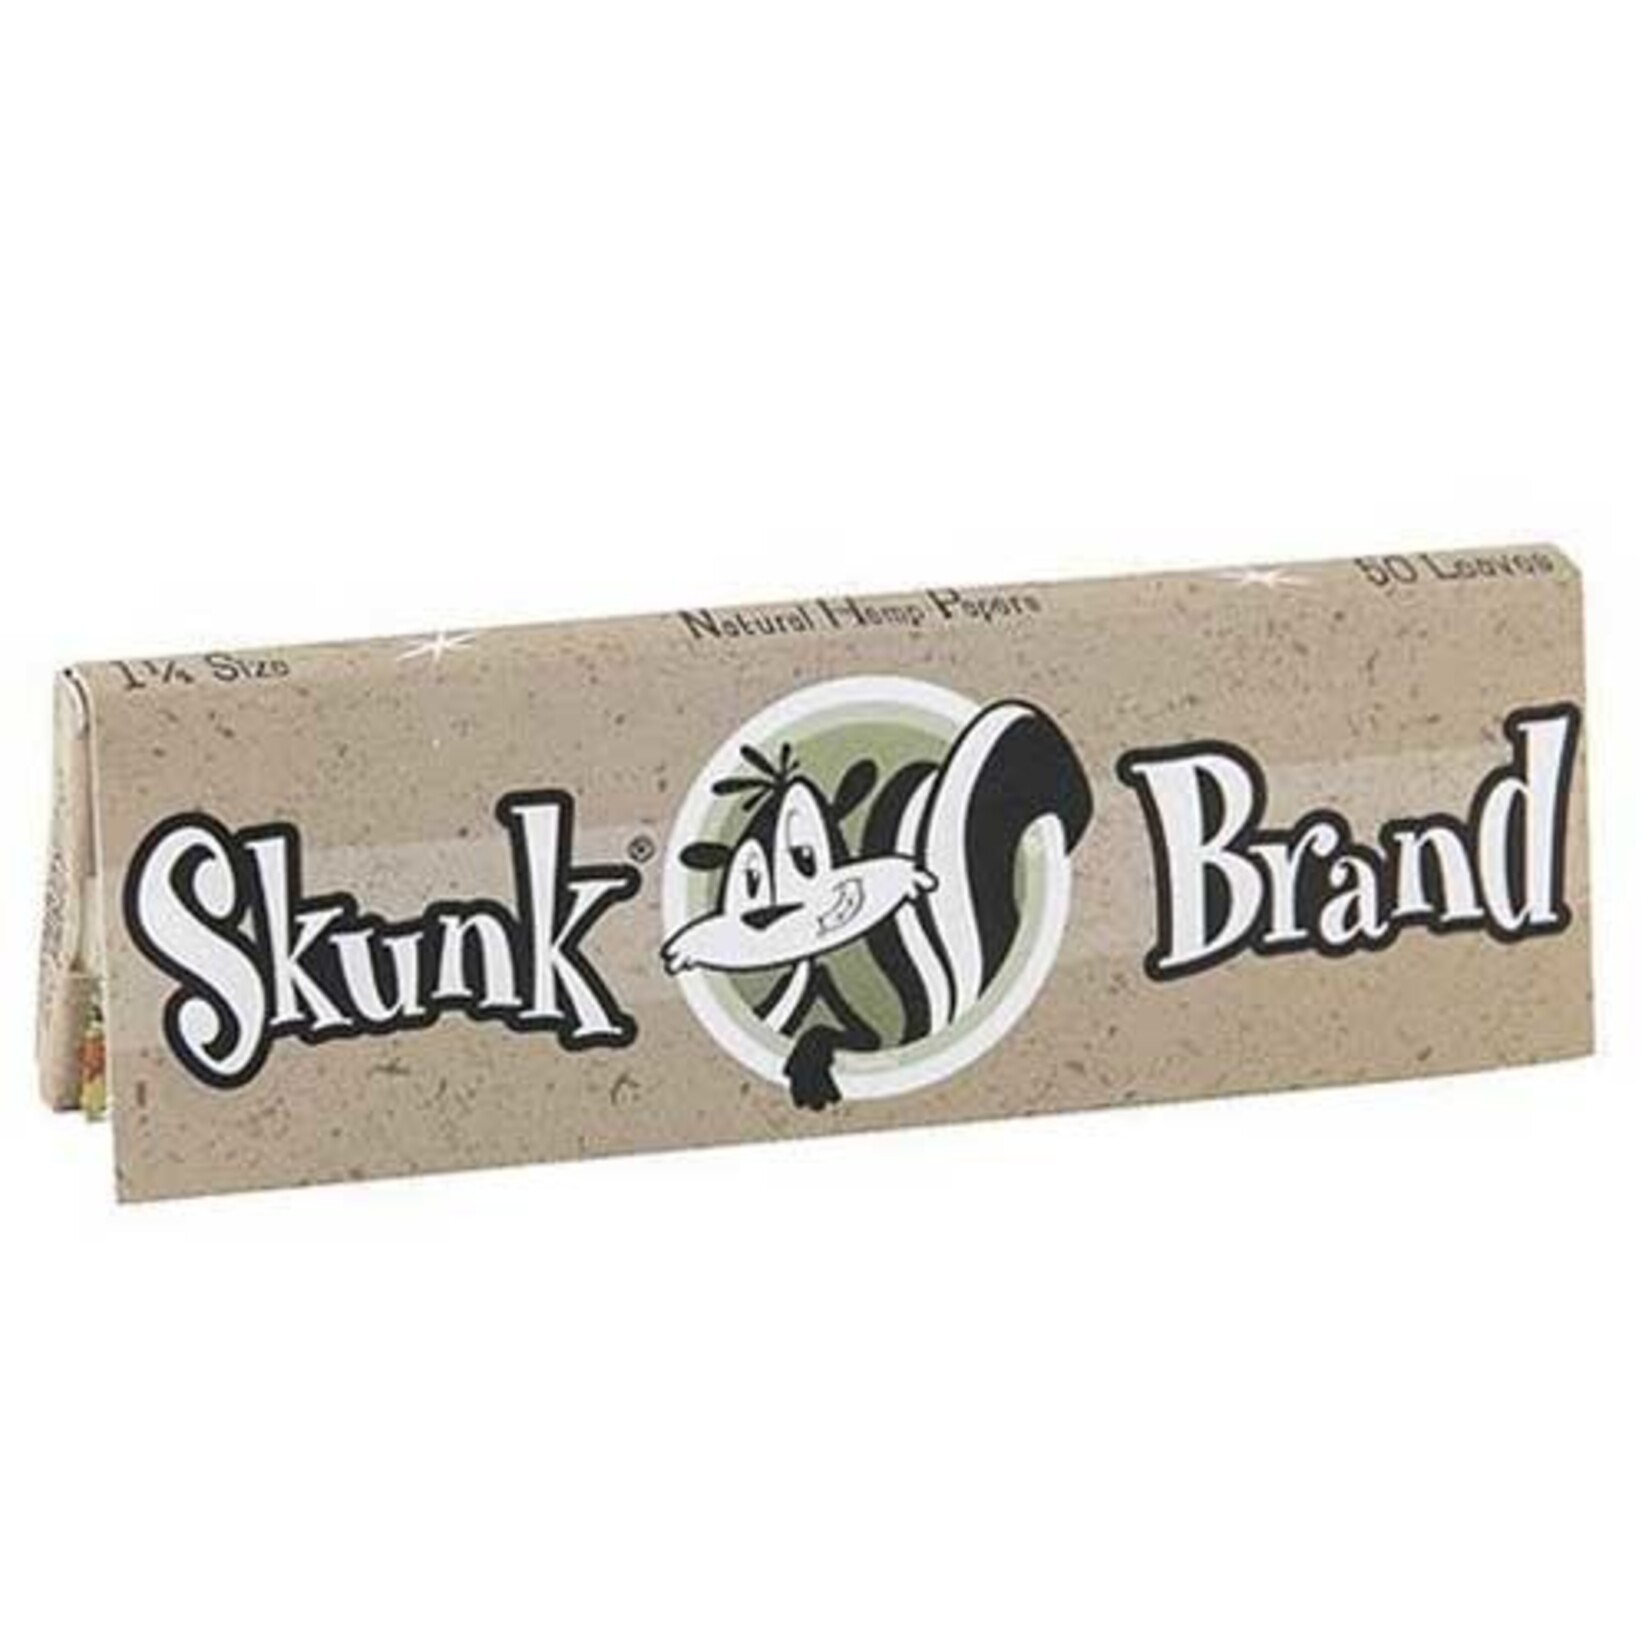 Skunk Brand Skunk Brand Premium Rolling Papers - Assorted Sizes